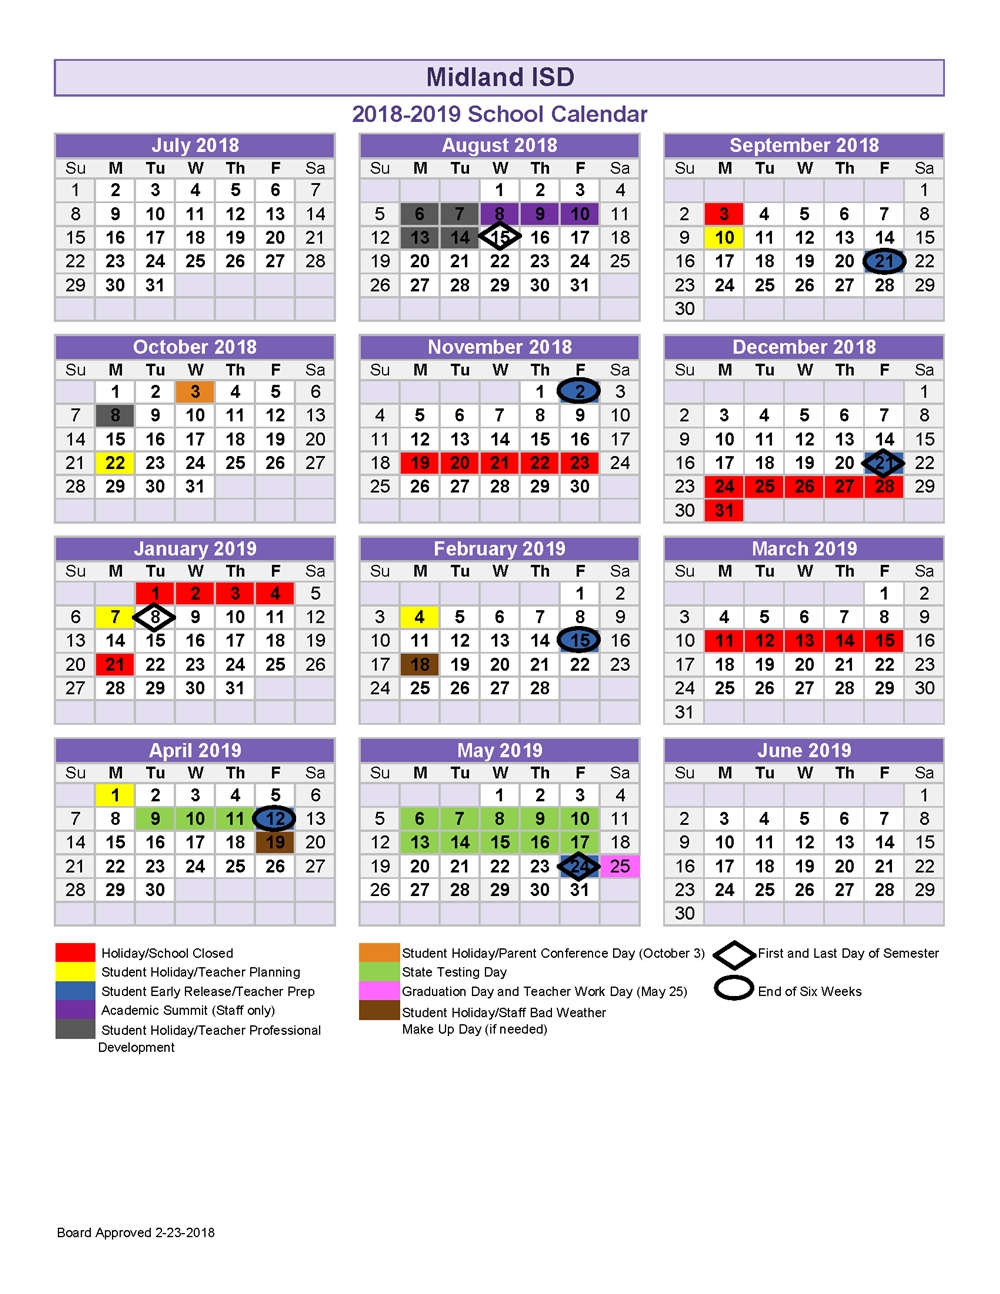 Lee County Schools Calendar | Qualads